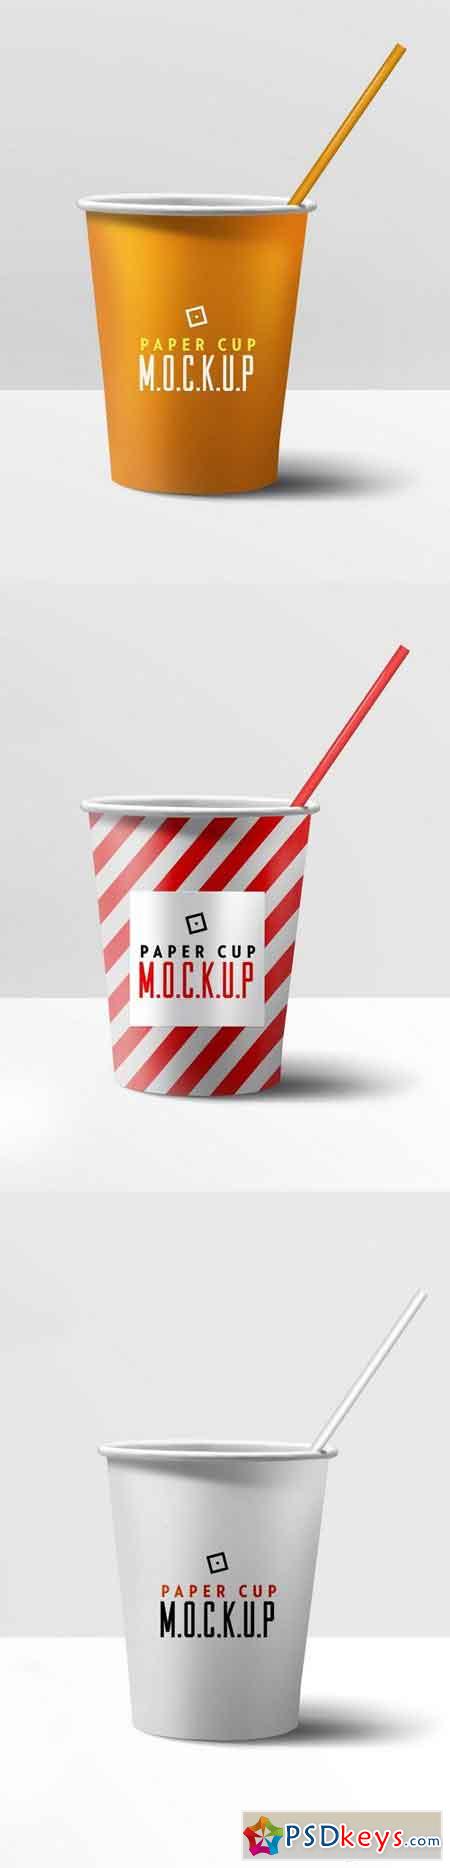 Paper Cup Mockup PSD